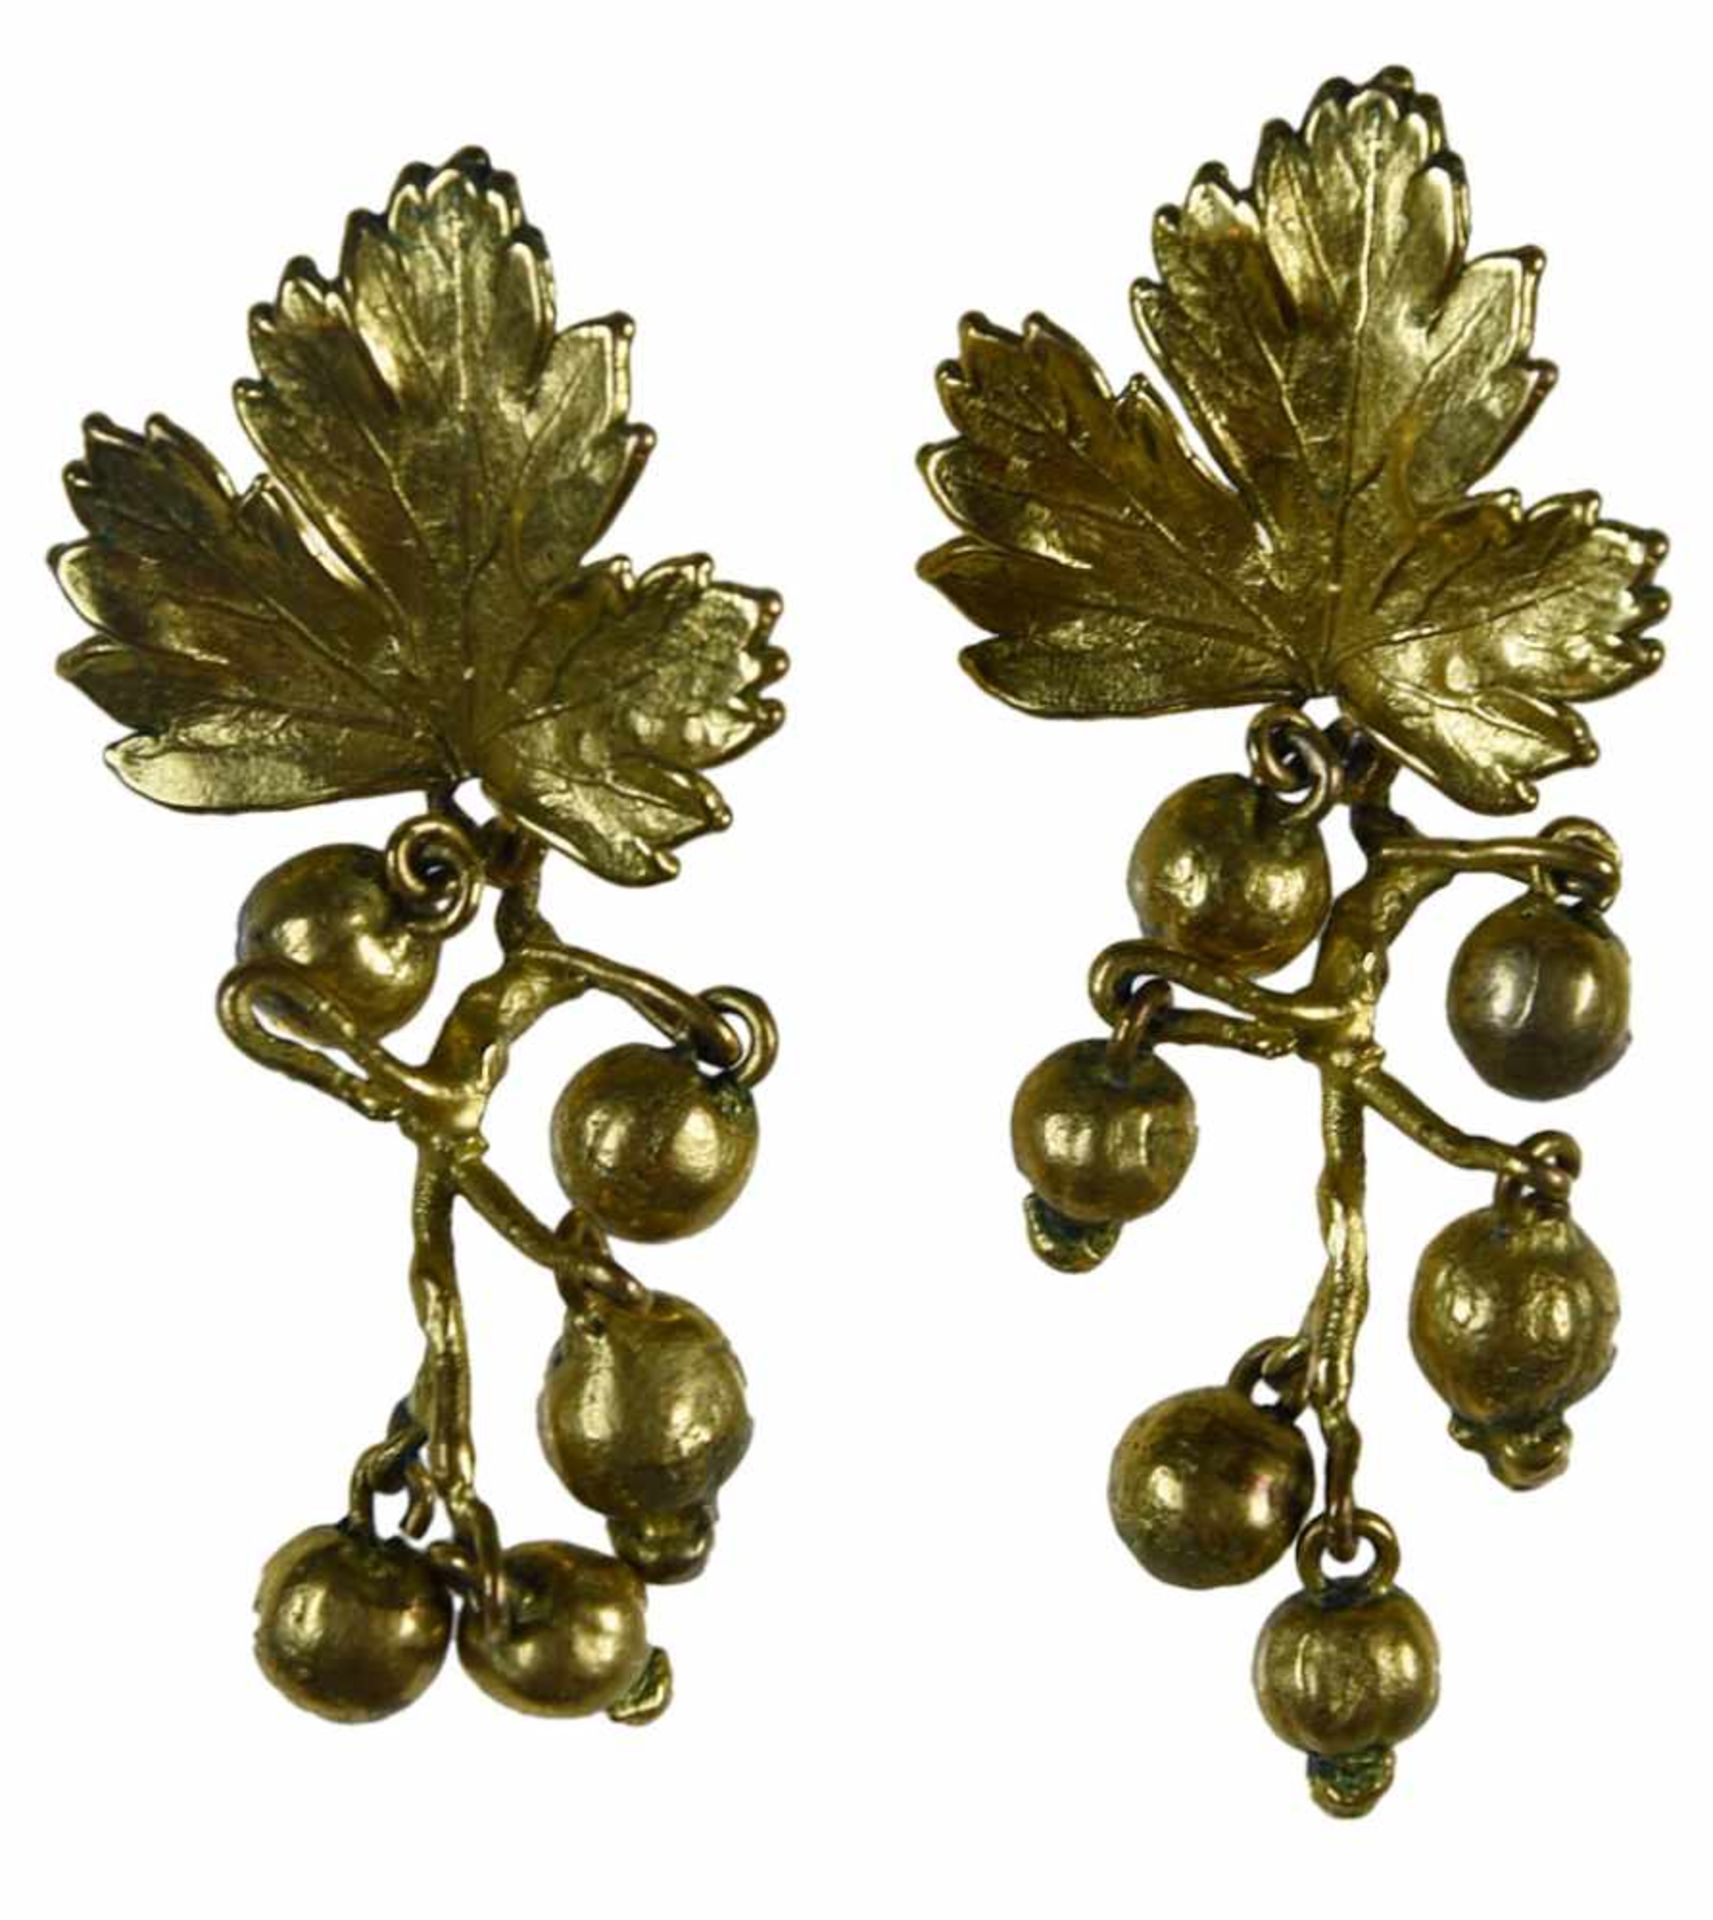 Claude Lalanne - Earrings in the shape of currant berries - Gloden bronze En bronze doré. Il